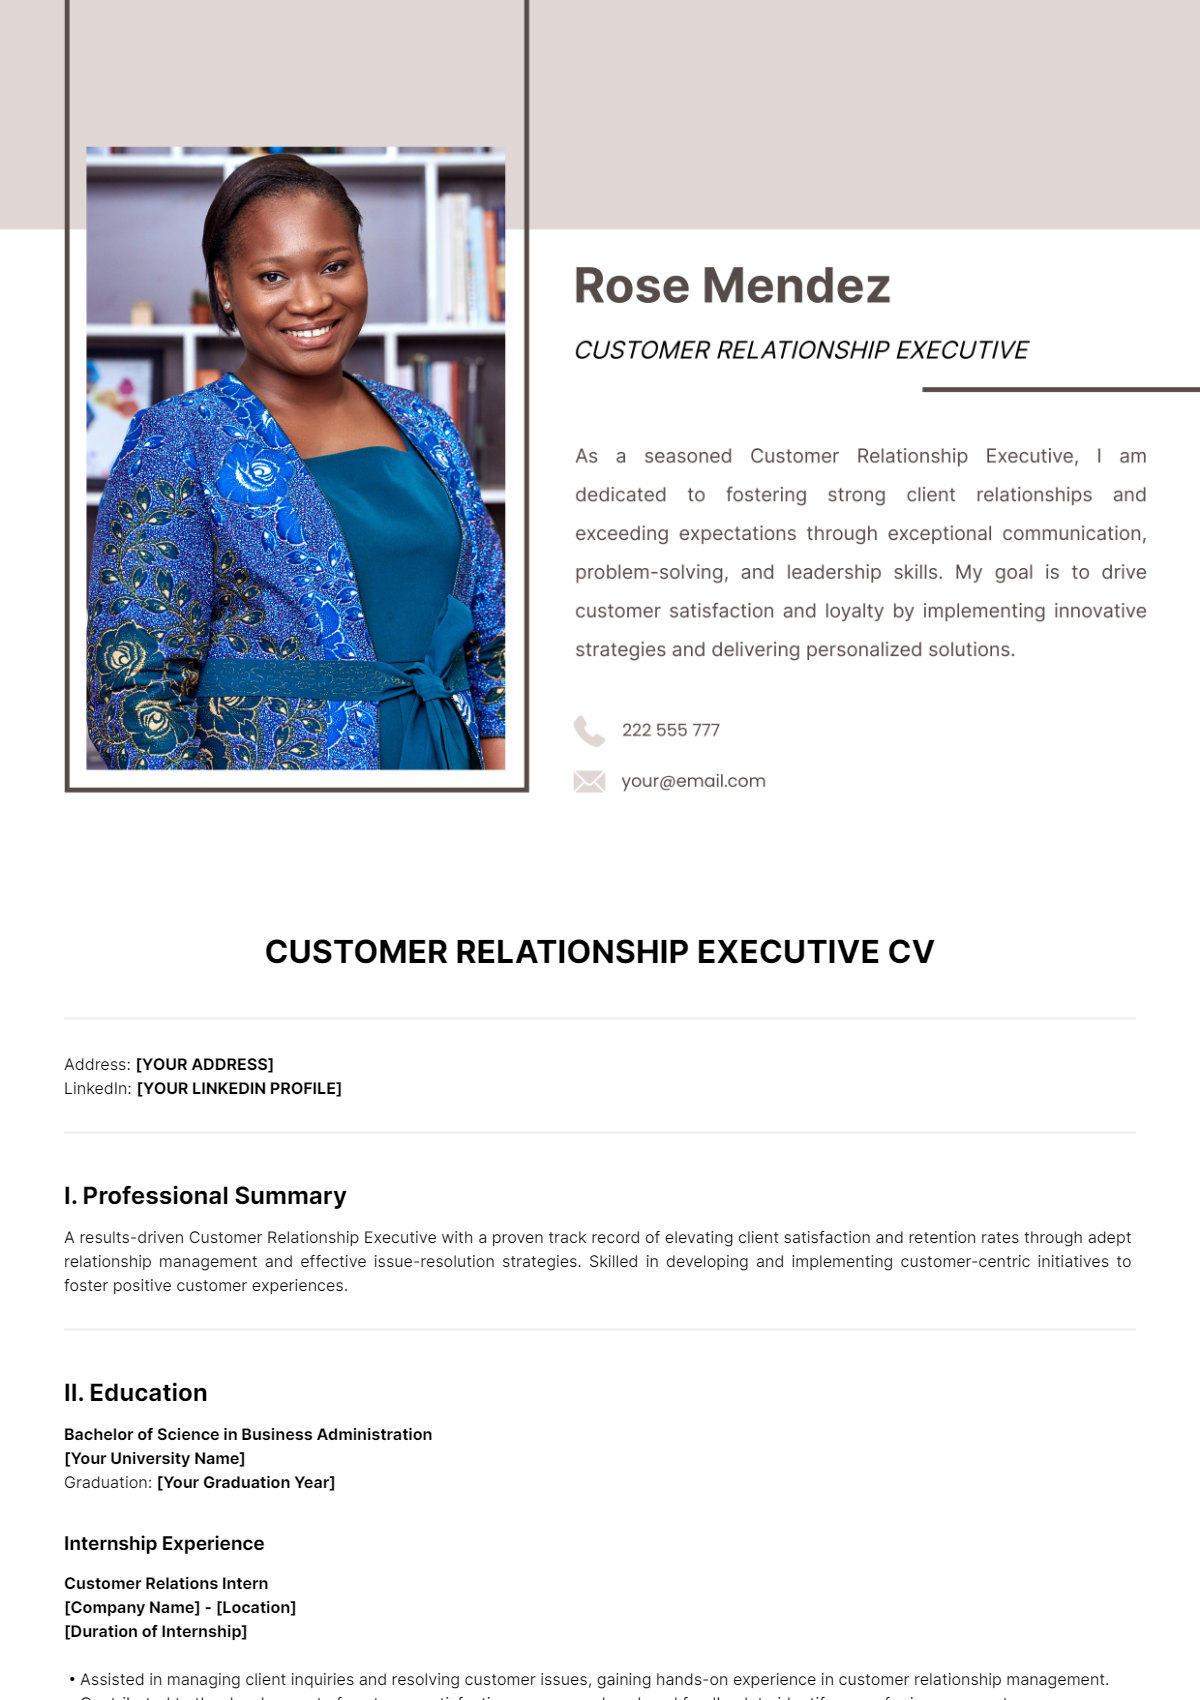 Customer Relationship Executive CV Template